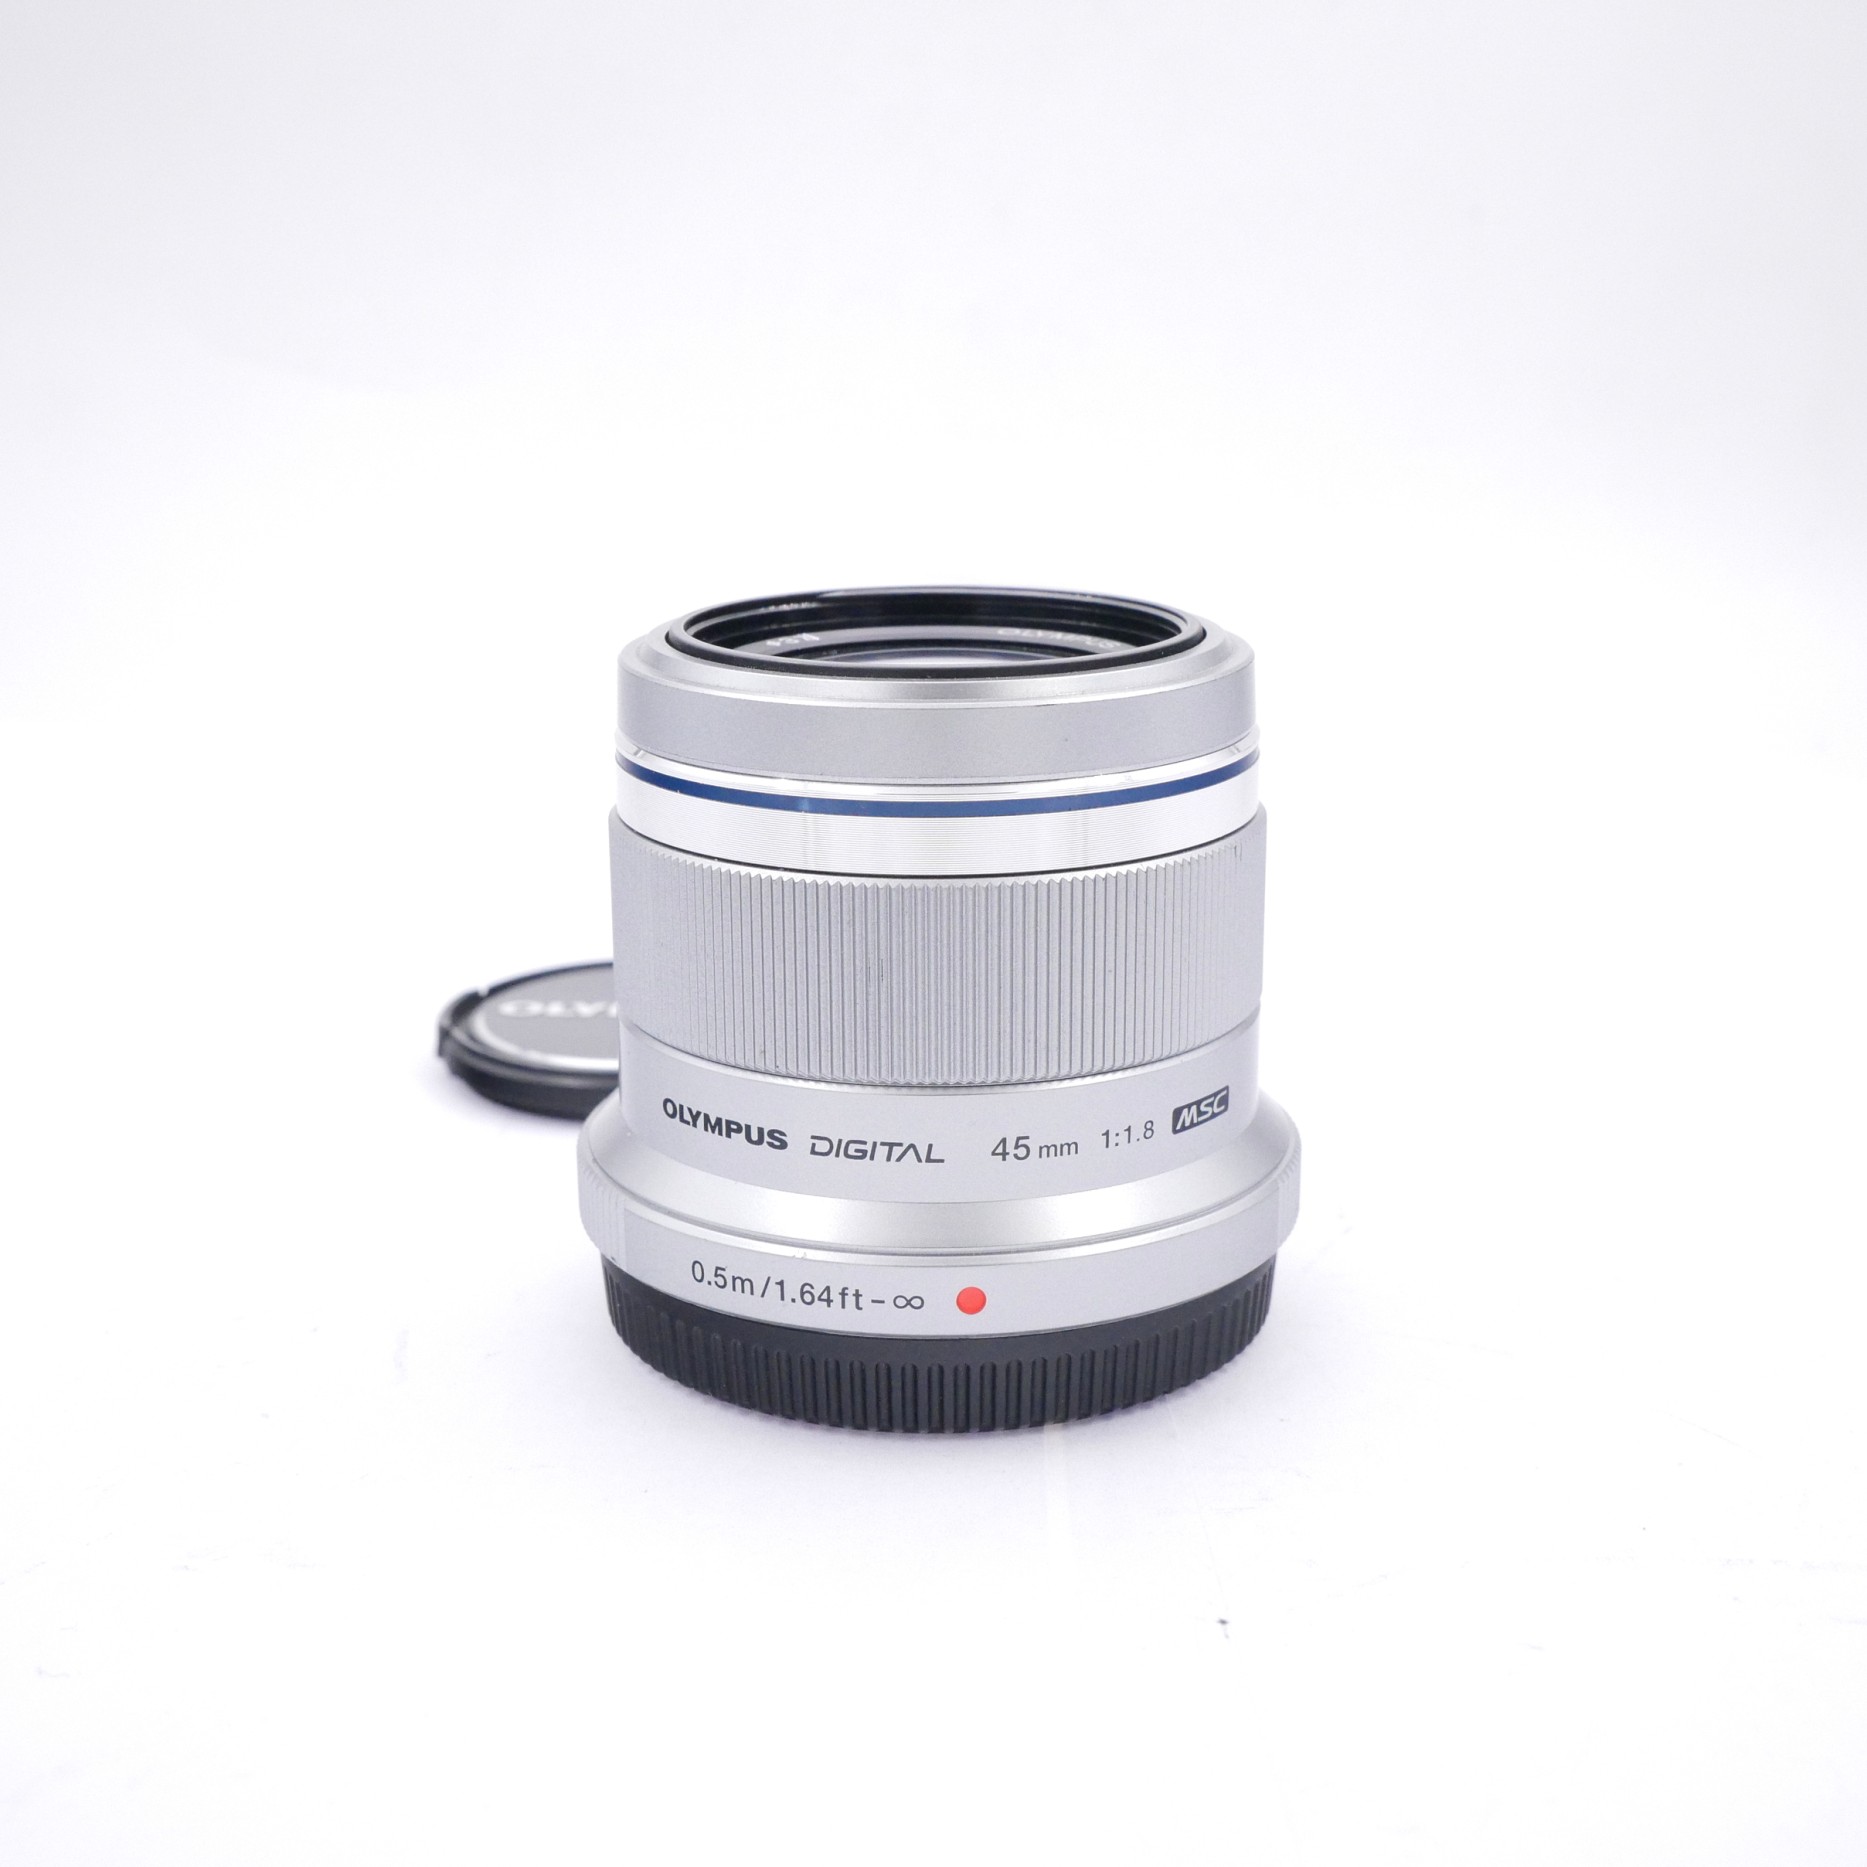   Olympus AF 45mm F/1.8 MSC Lens (m4/3)